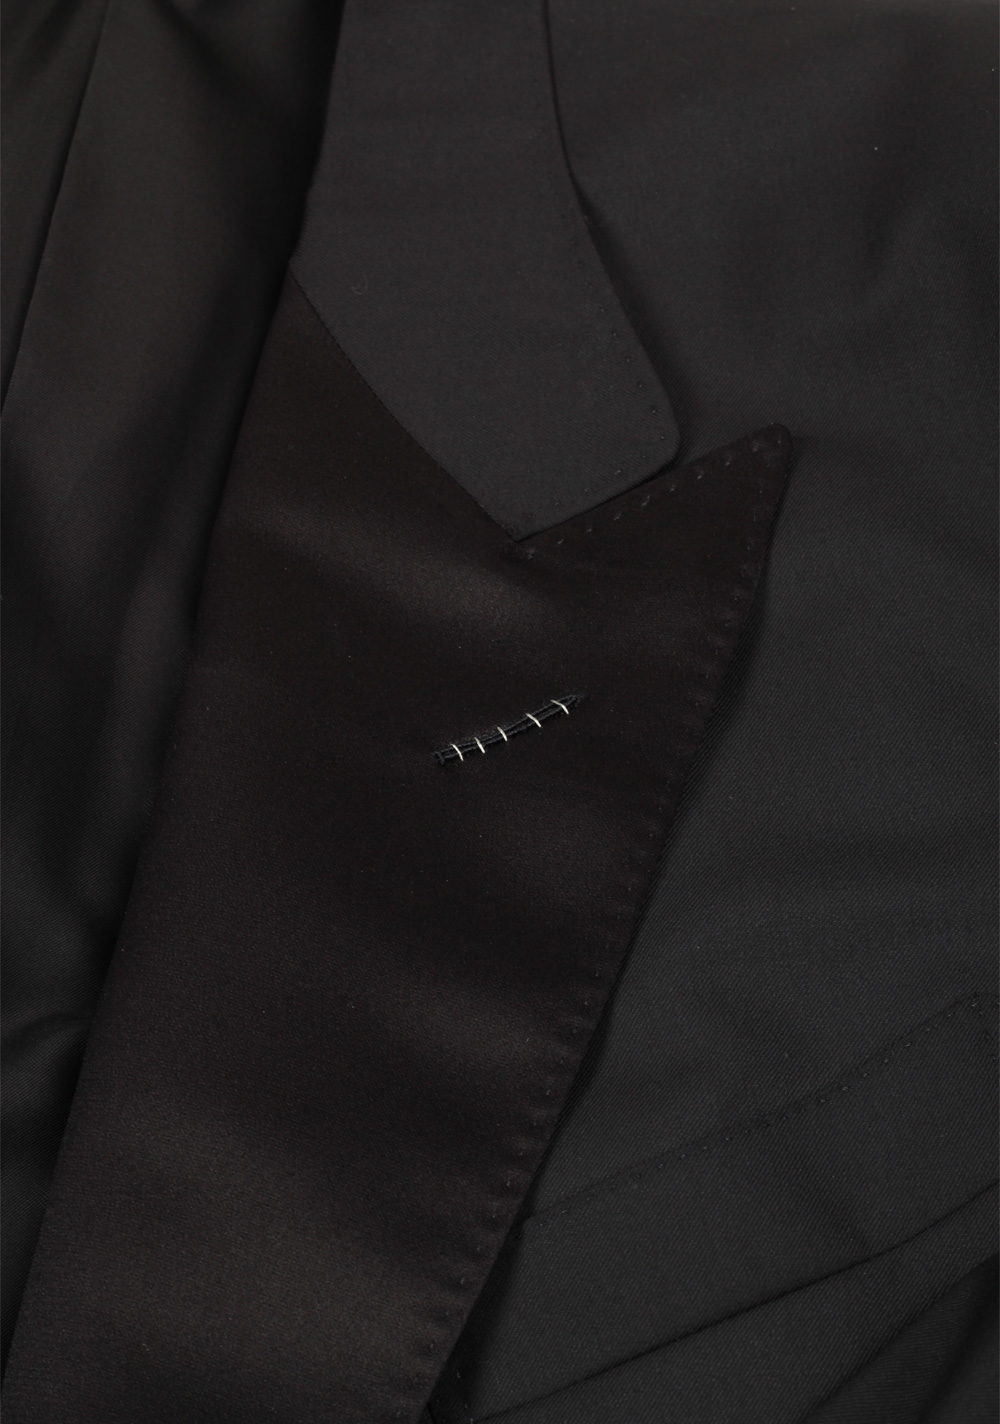 TOM FORD Shelton Black Tuxedo Dinner Suit Size 60 / 50R U.S. | Costume Limité